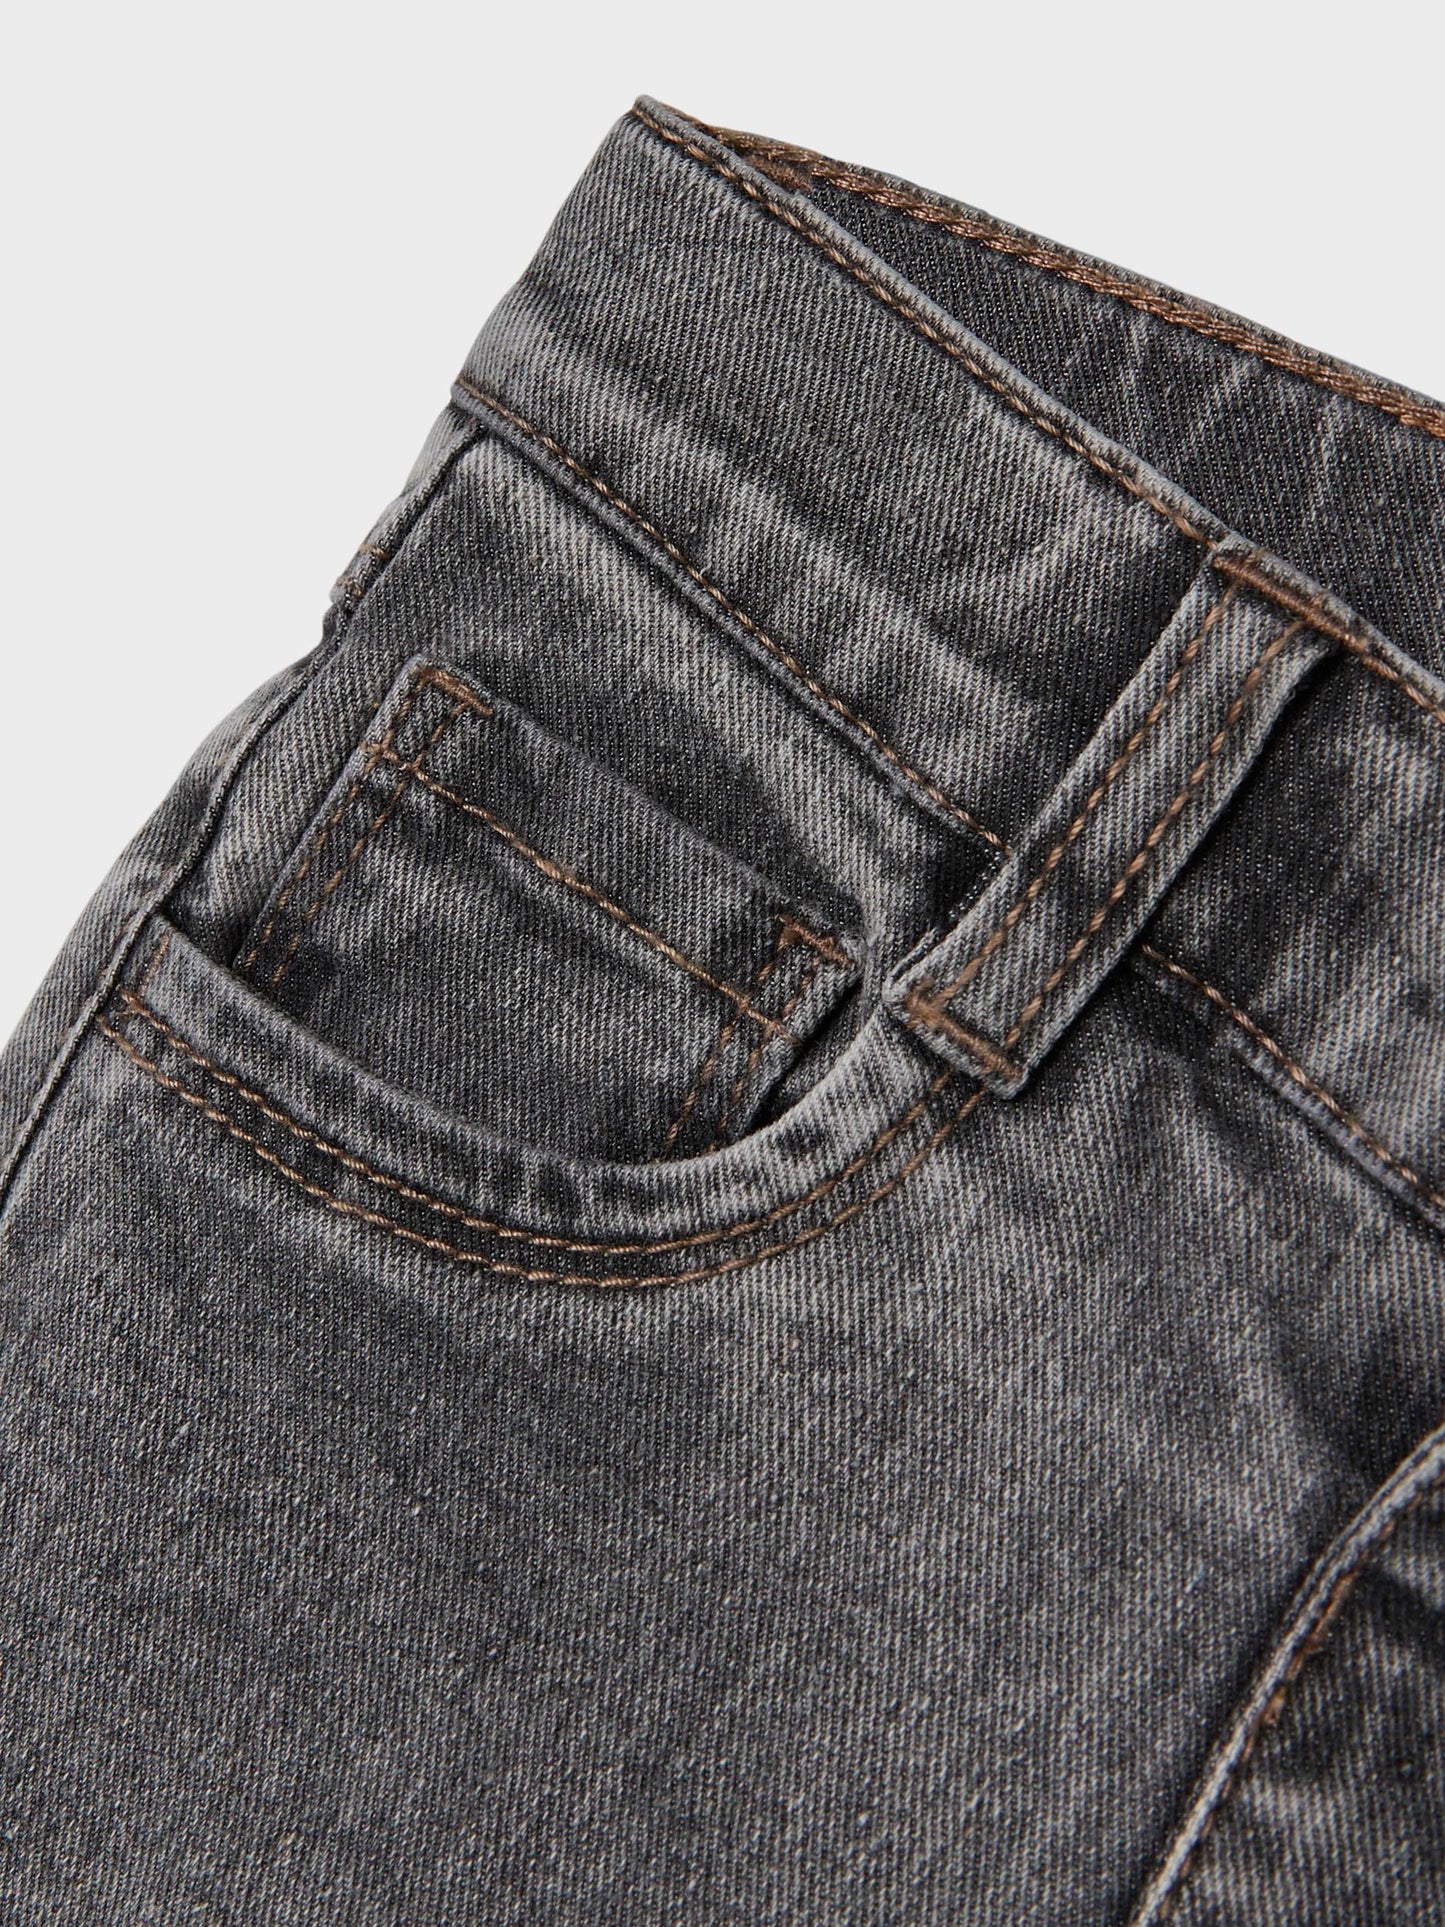 Lil atelier - flared jeans - Light grey denim